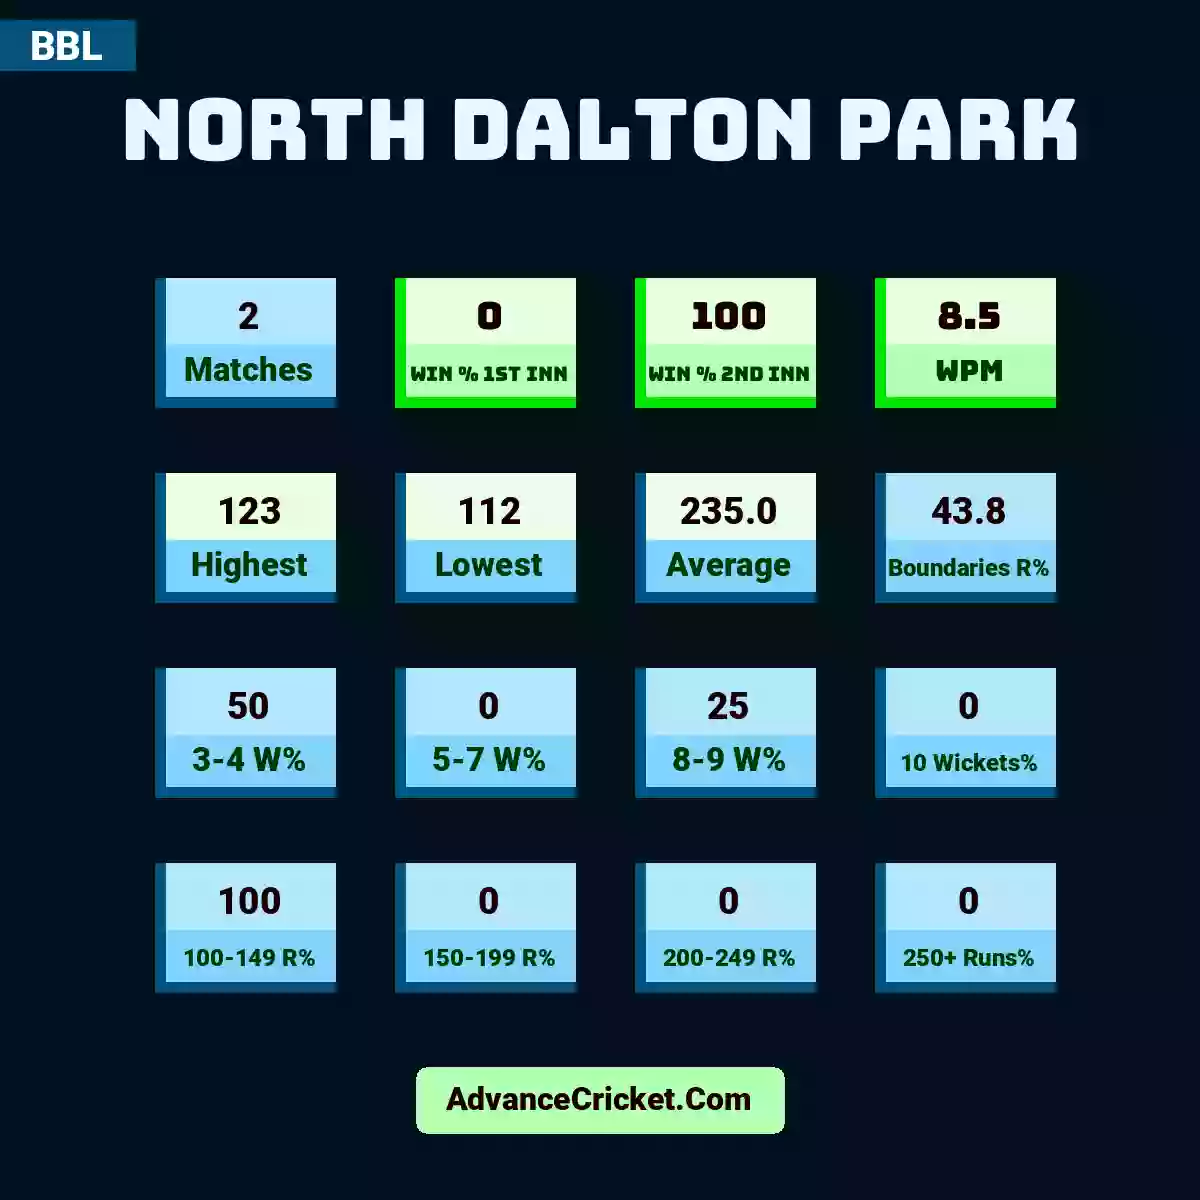 Image showing North Dalton Park with Matches: 2, Win % 1st Inn: 0, Win % 2nd Inn: 100, WPM: 8.5, Highest: 123, Lowest: 112, Average: 235.0, Boundaries R%: 43.8, 3-4 W%: 50, 5-7 W%: 0, 8-9 W%: 25, 10 Wickets%: 0, 100-149 R%: 100, 150-199 R%: 0, 200-249 R%: 0, 250+ Runs%: 0.